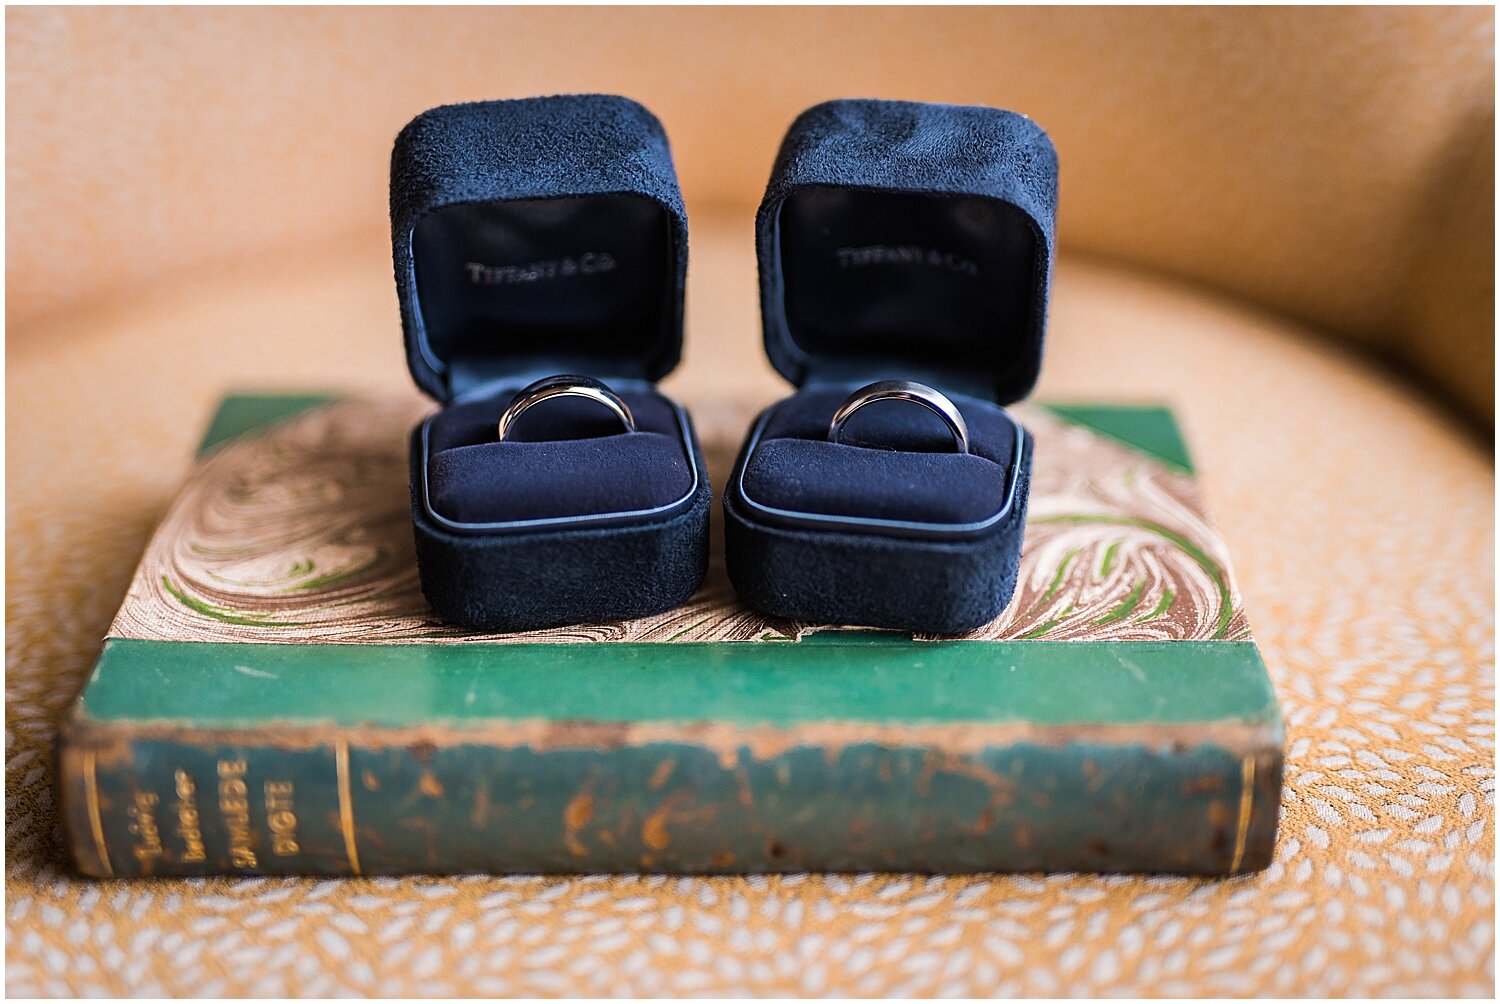  grooms wedding rings for Houston wedding 